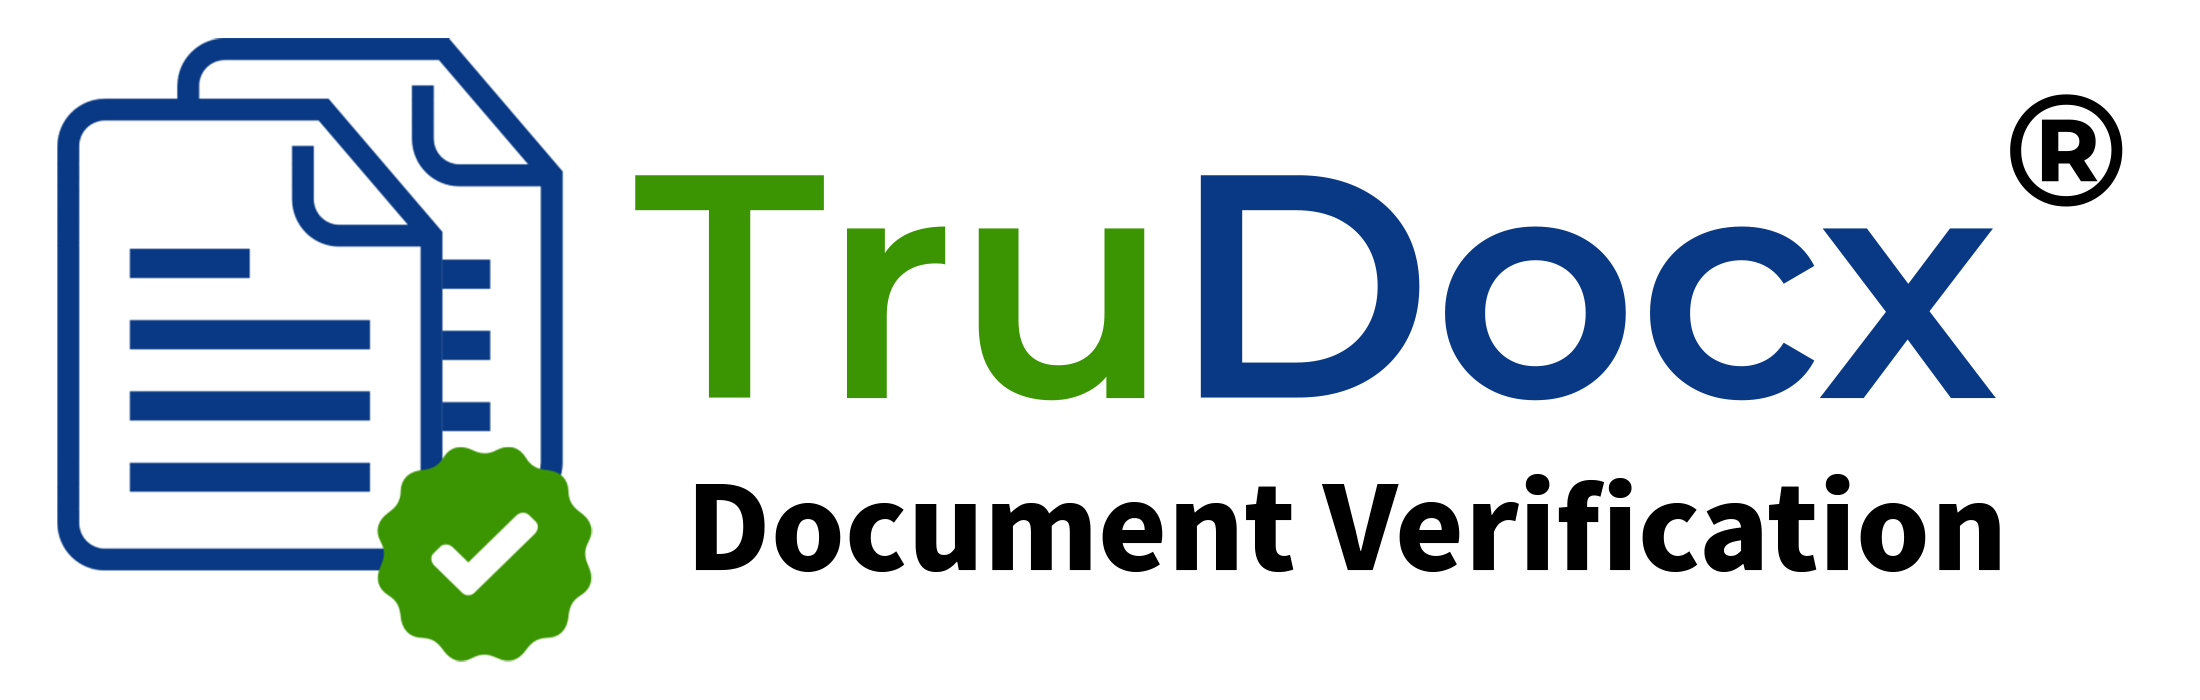 Trudocx Logo-final